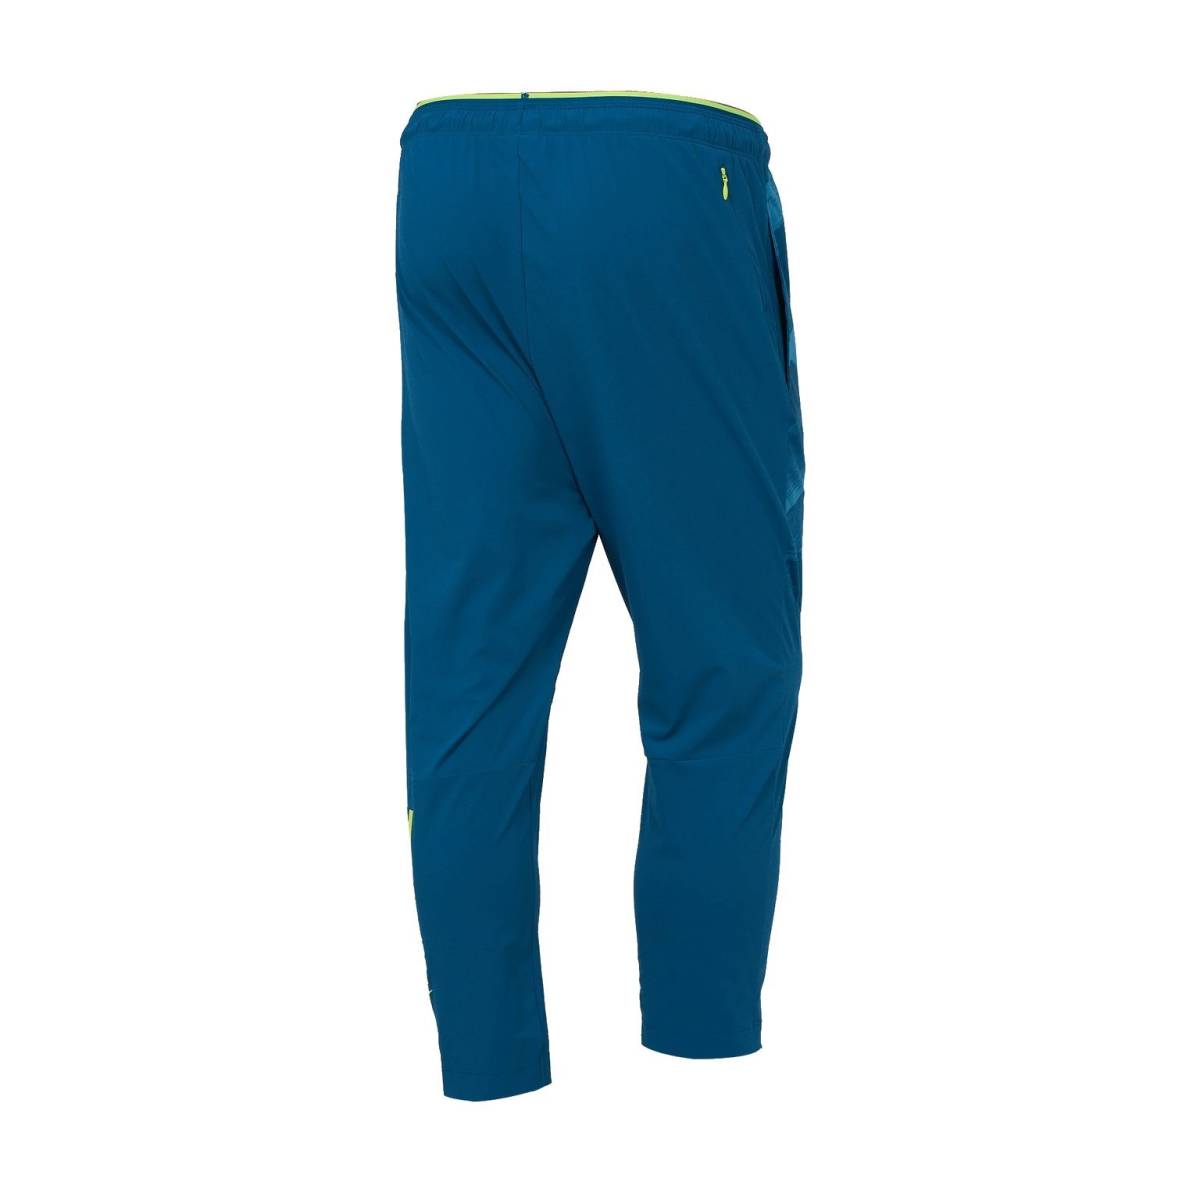 # Nike sport crash setup f-ti- pants blue new goods S size NIKE top and bottom set DRI-FIT DD1710-476 DD1721-476